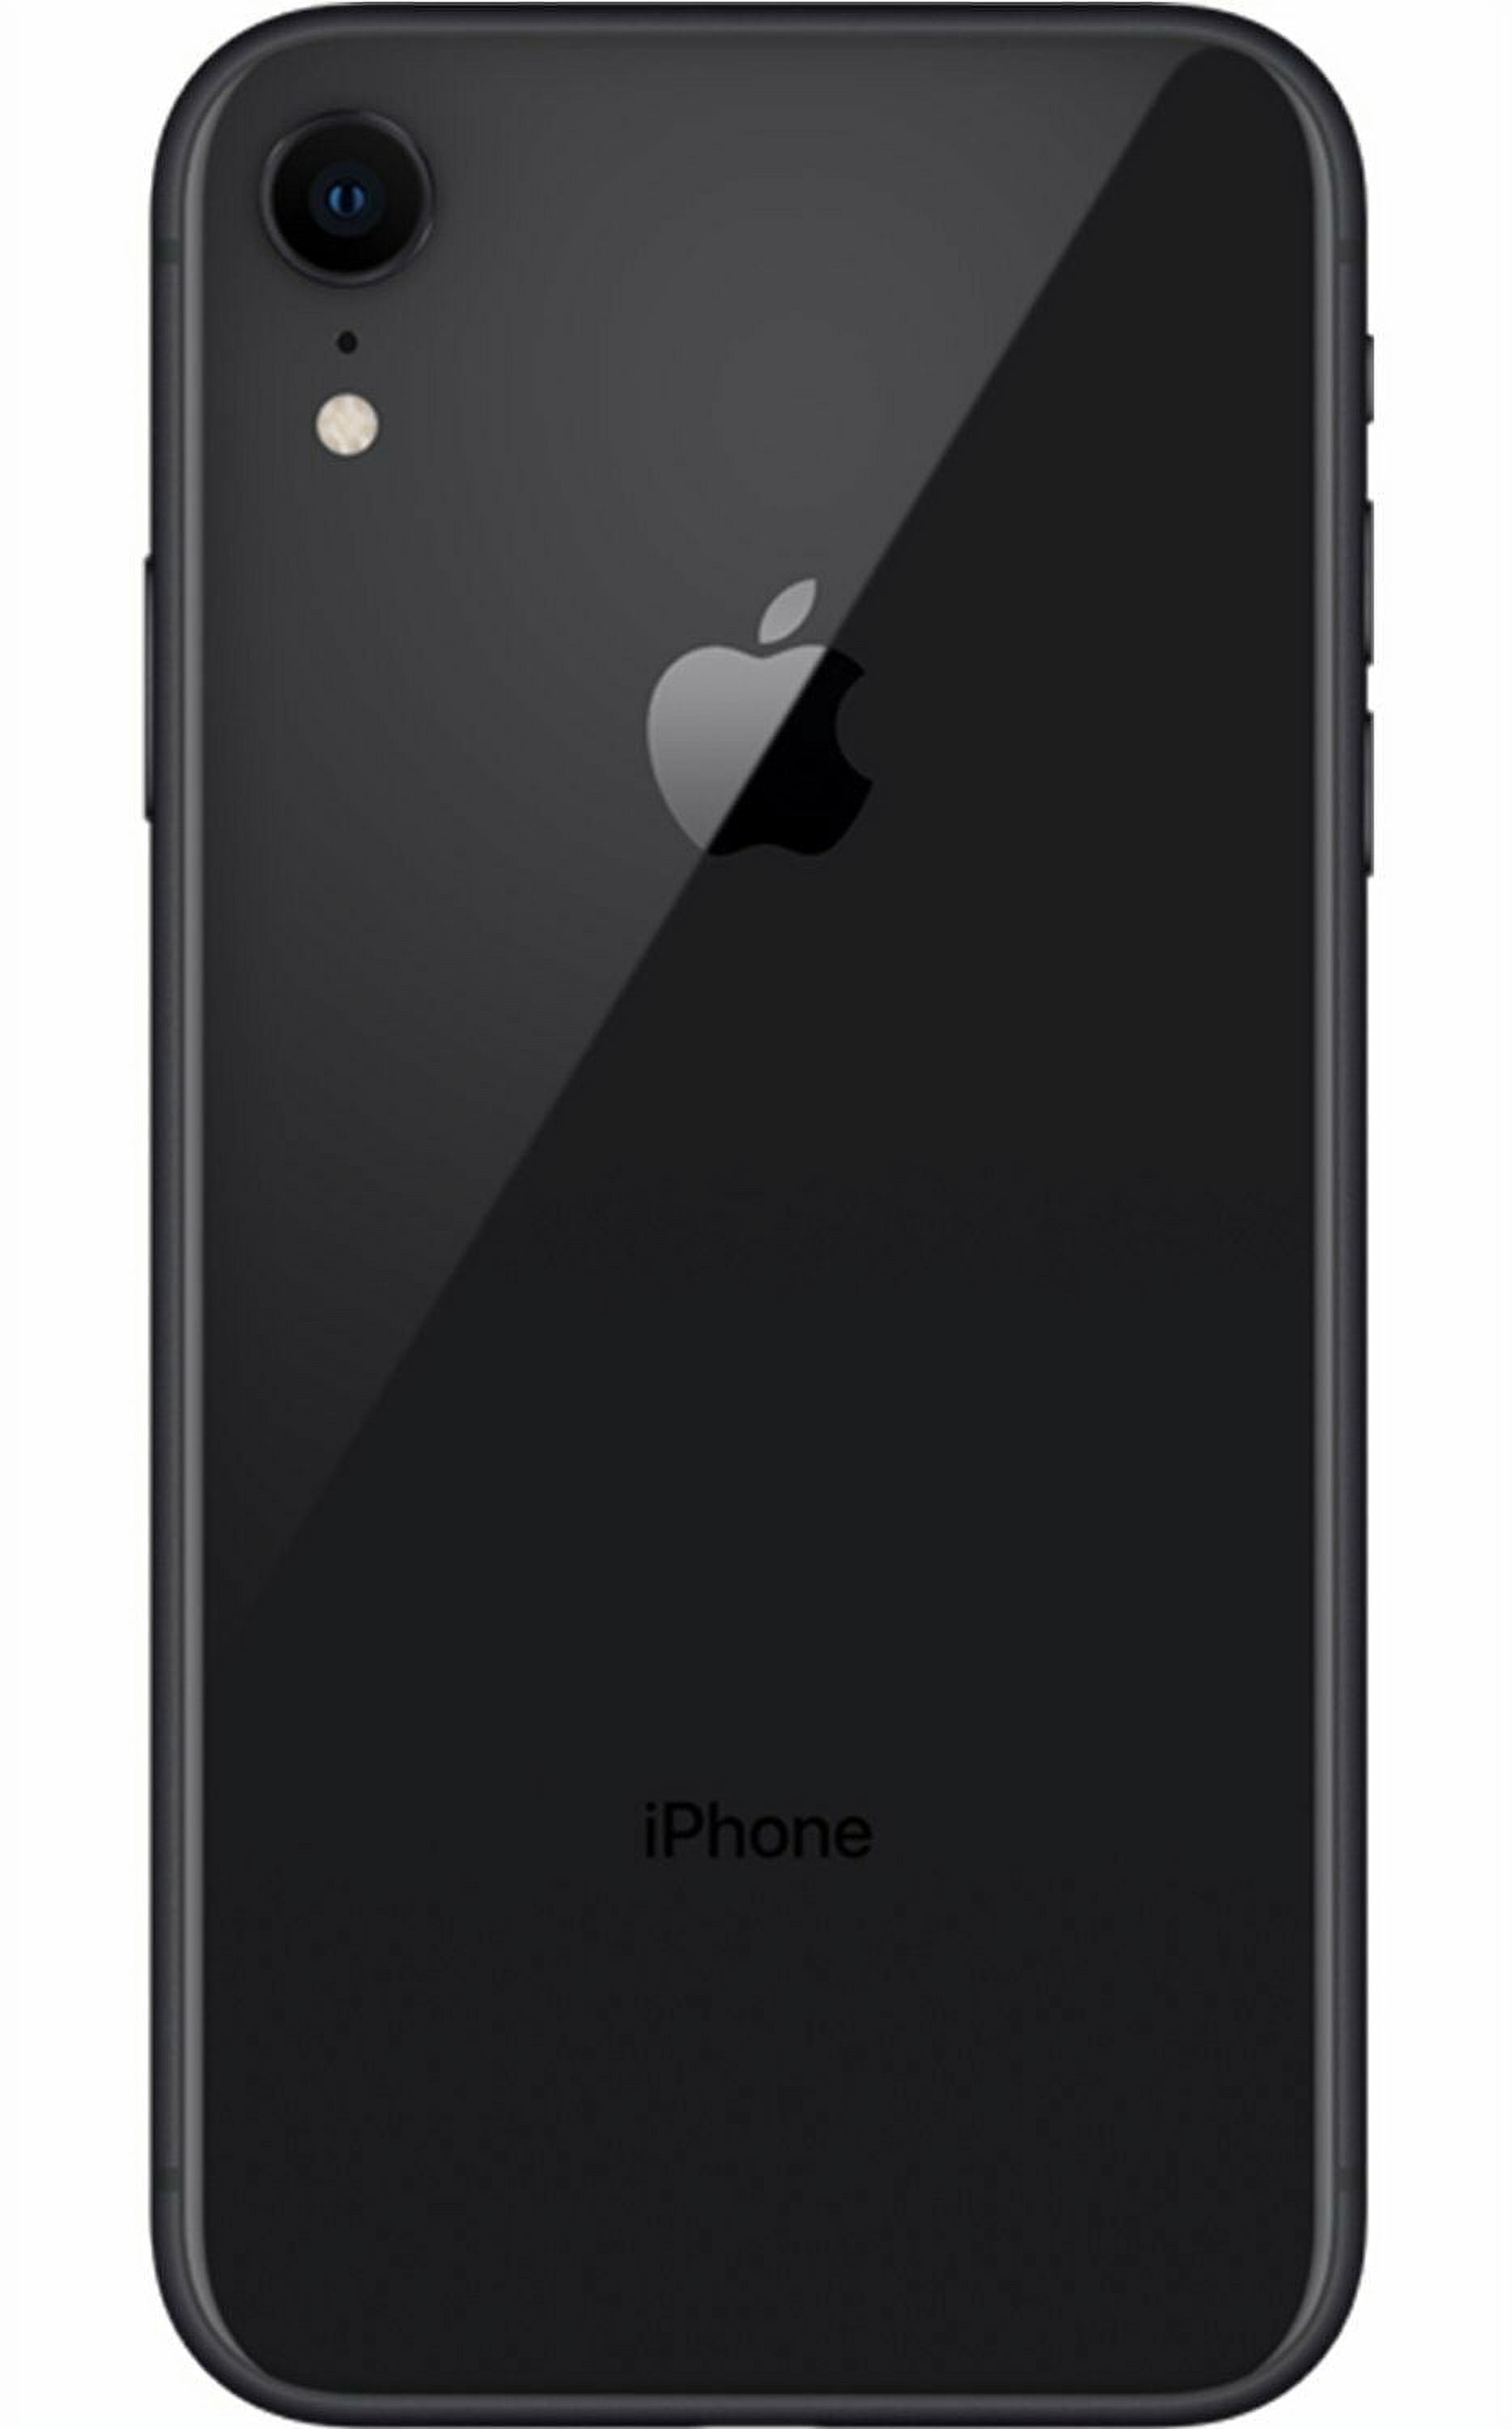 Restored Apple iPhone XR 64GB Factory Unlocked Smartphone 4G LTE iOS  Smartphone (Refurbished)